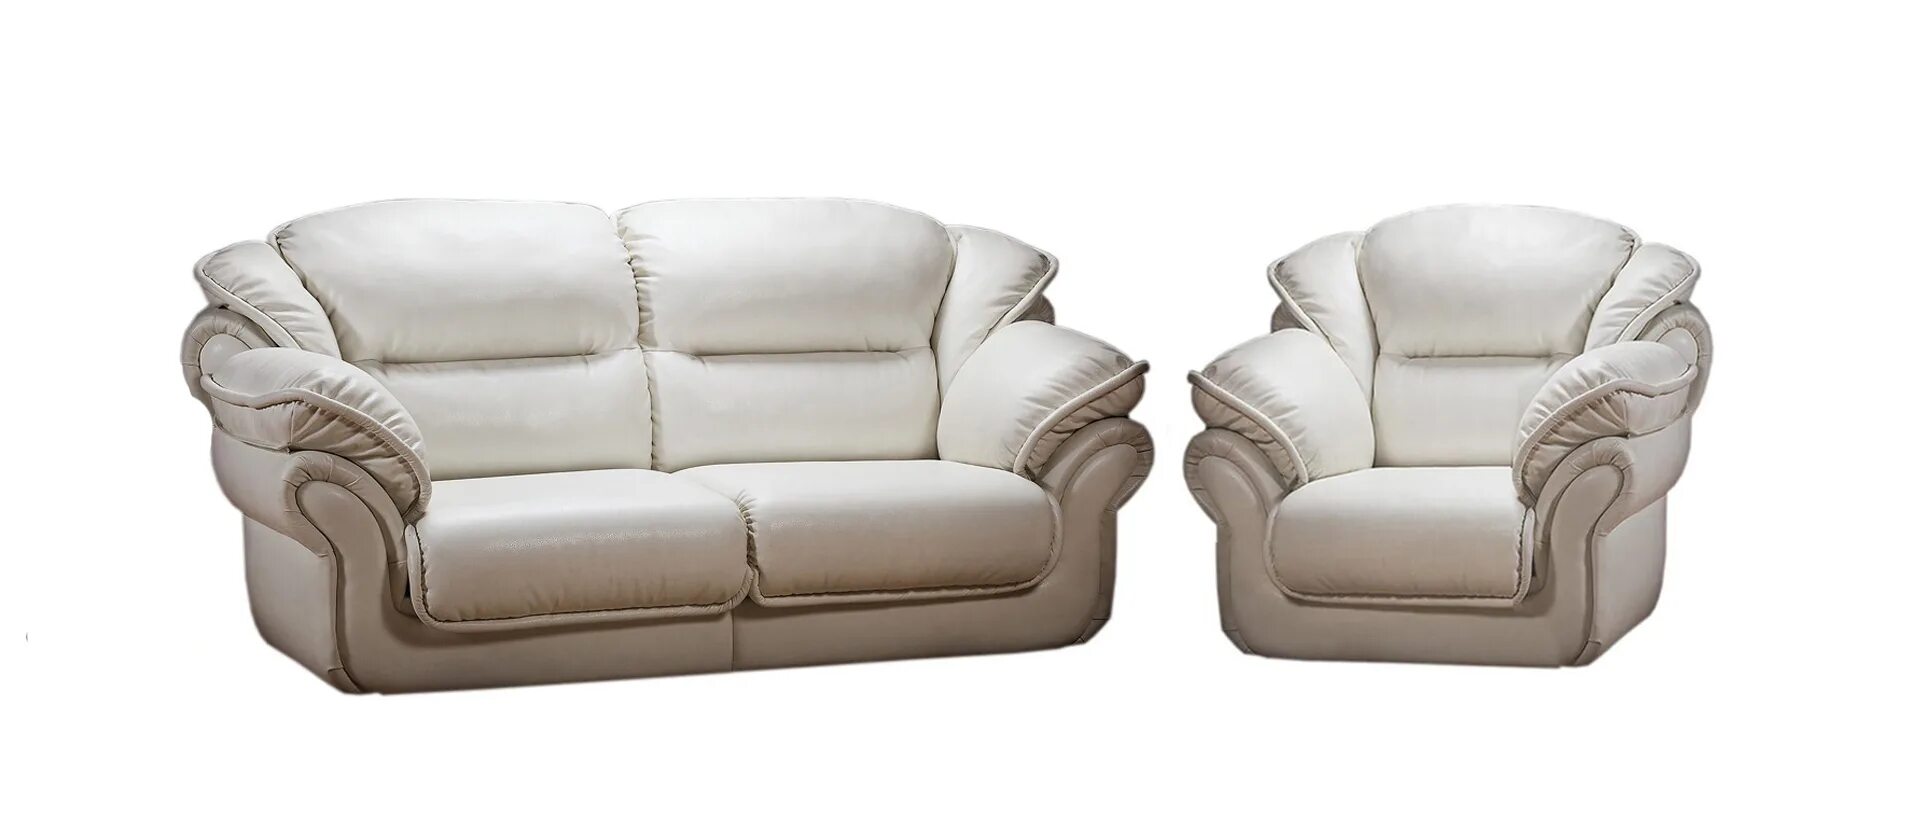 Комплект мебели Адажио LAVSOFA. Диван Адажио LAVSOFA. Диван Адажио 2 LAVSOFA. Диван и два кресла "Кинг" (3м+12+12), натуральная кожа № 1060.